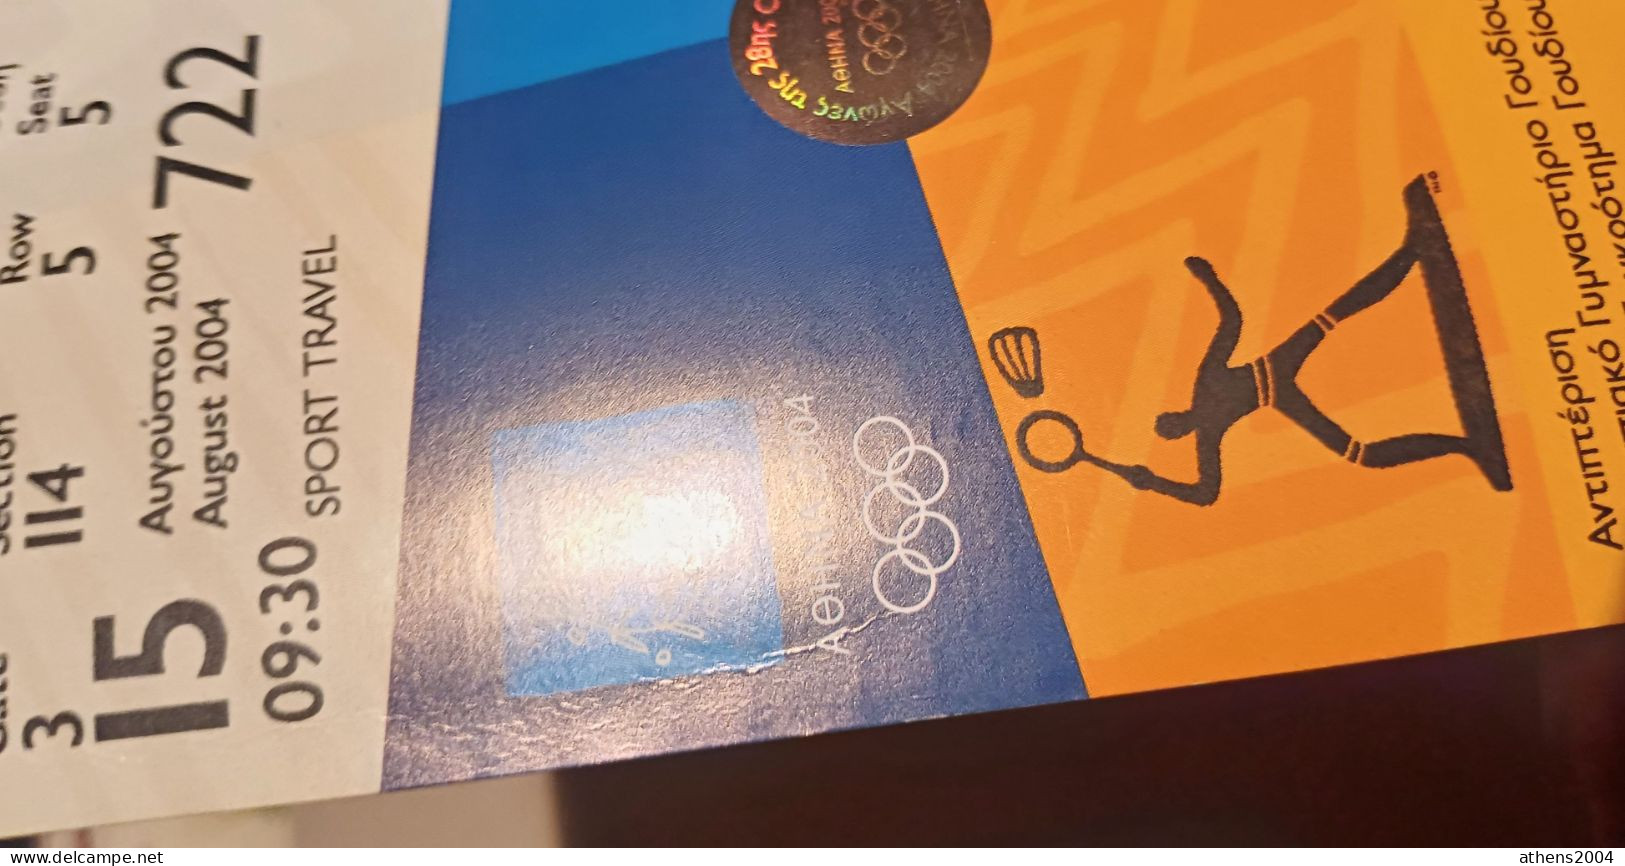 Athens 2004 Olympic Games -  Badminton Unused Ticket, Code: 722 - Habillement, Souvenirs & Autres